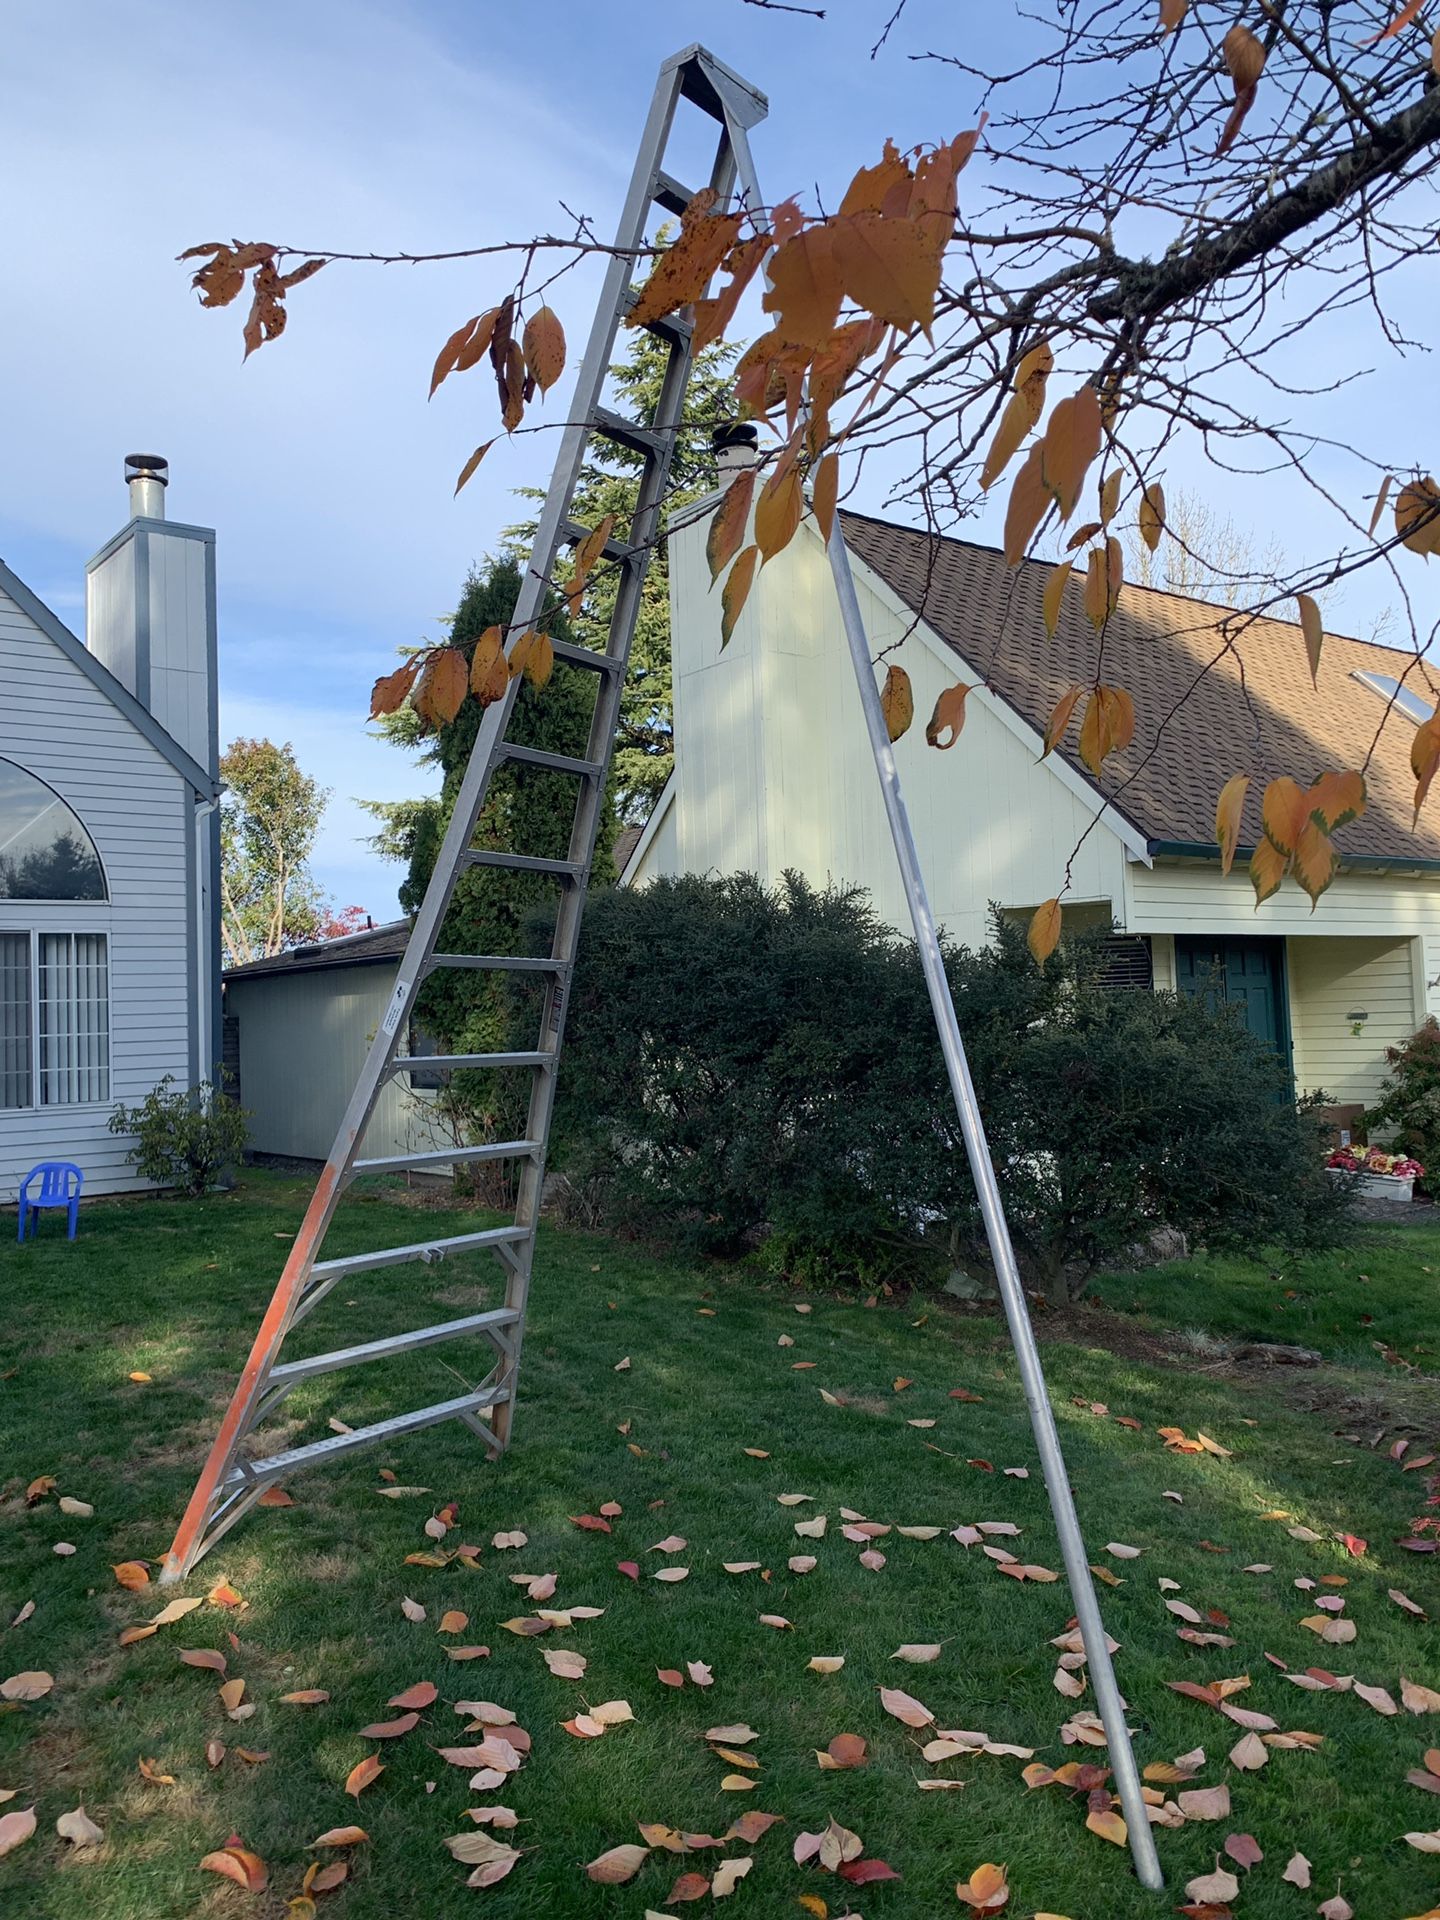 Orchard ladder